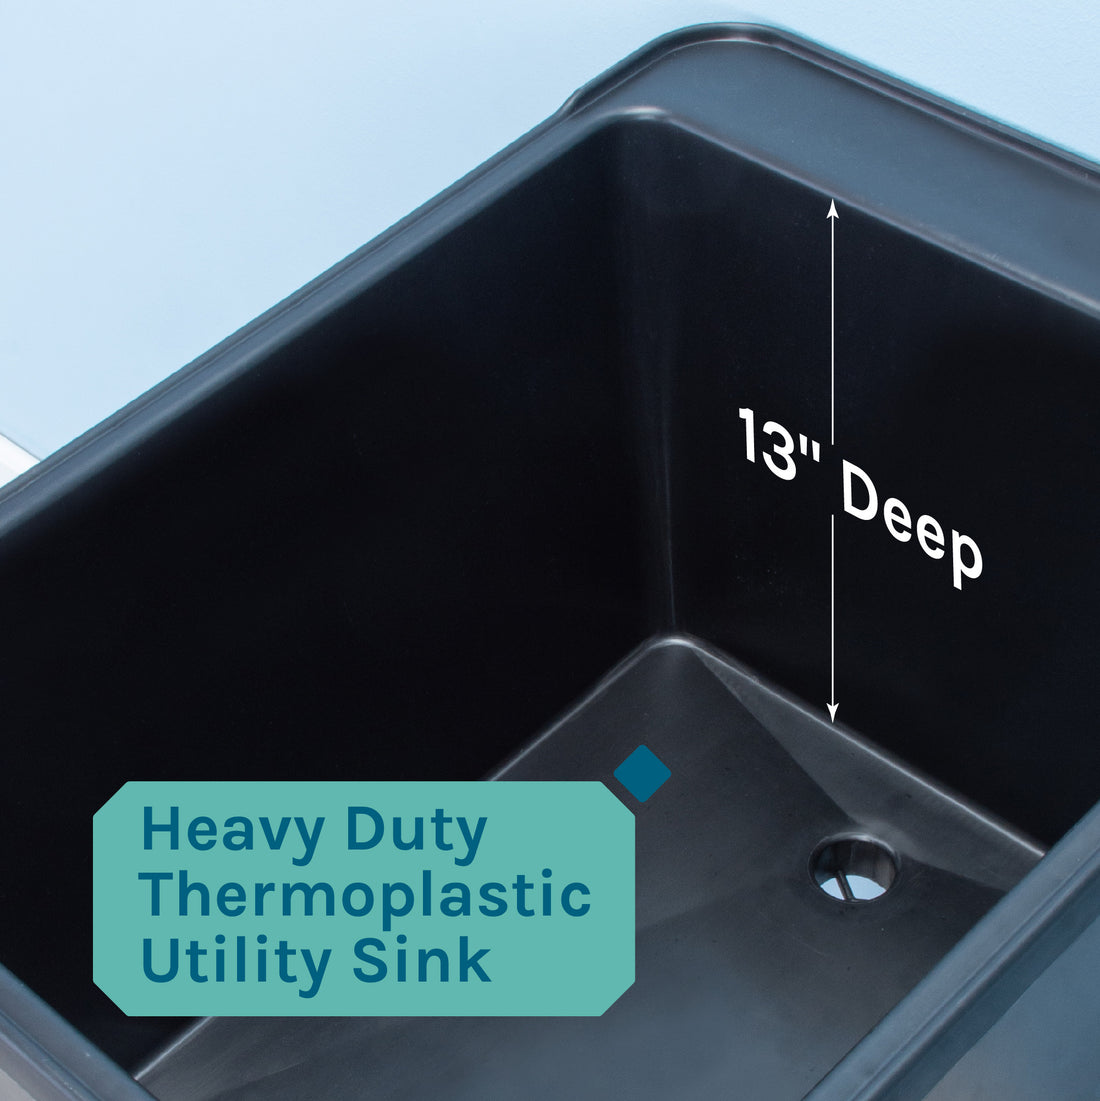 Tehila Space Saver Freestanding Black Utility Sink with Black Finish Low-Profile Pull-Down Faucet - Utility sinks vanites Tehila